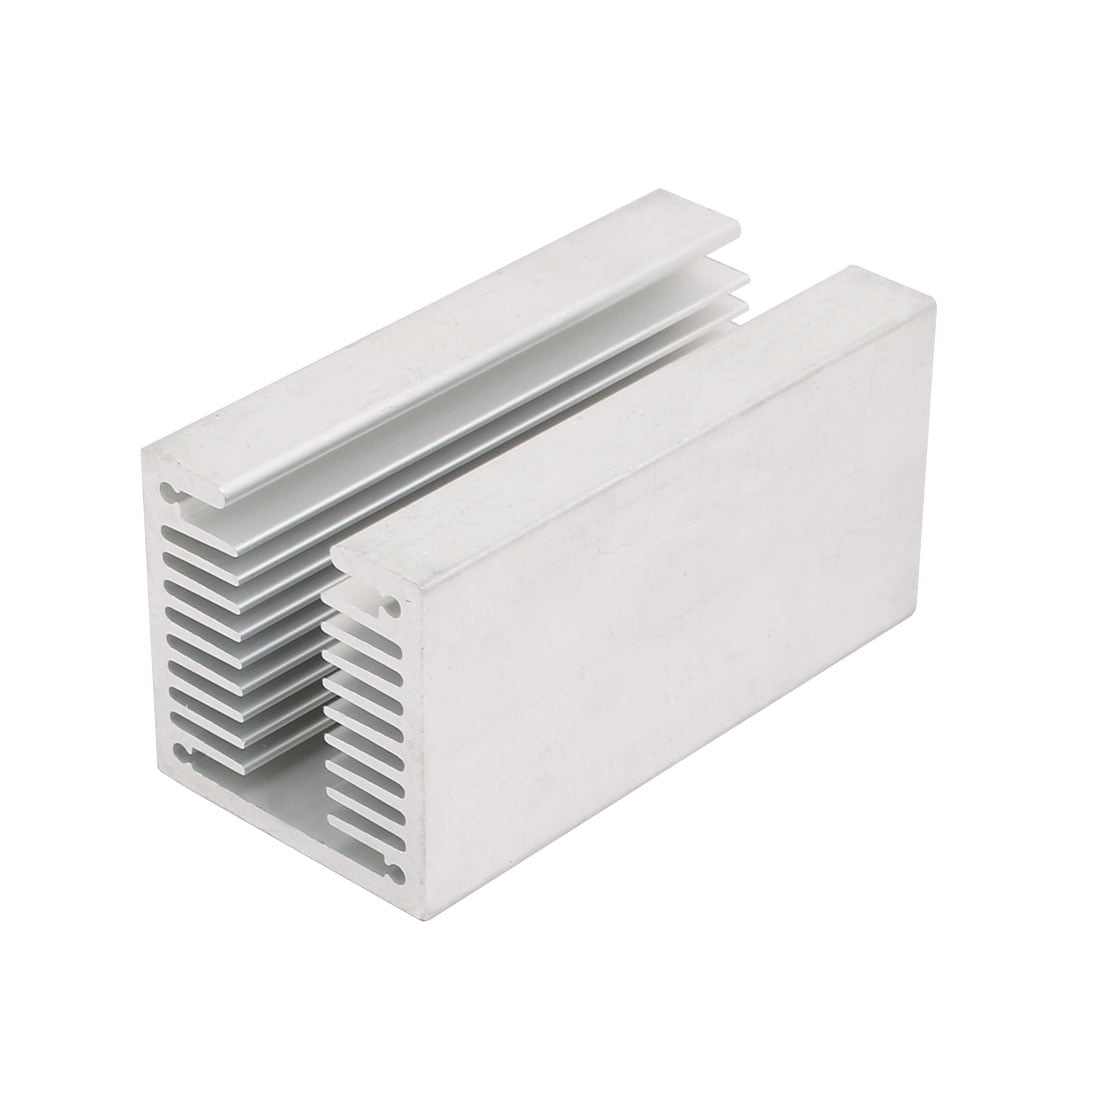 Silver Tone Aluminium Heat Diffuse Heat Sink Cooling Fin 120x100x18mm DT 